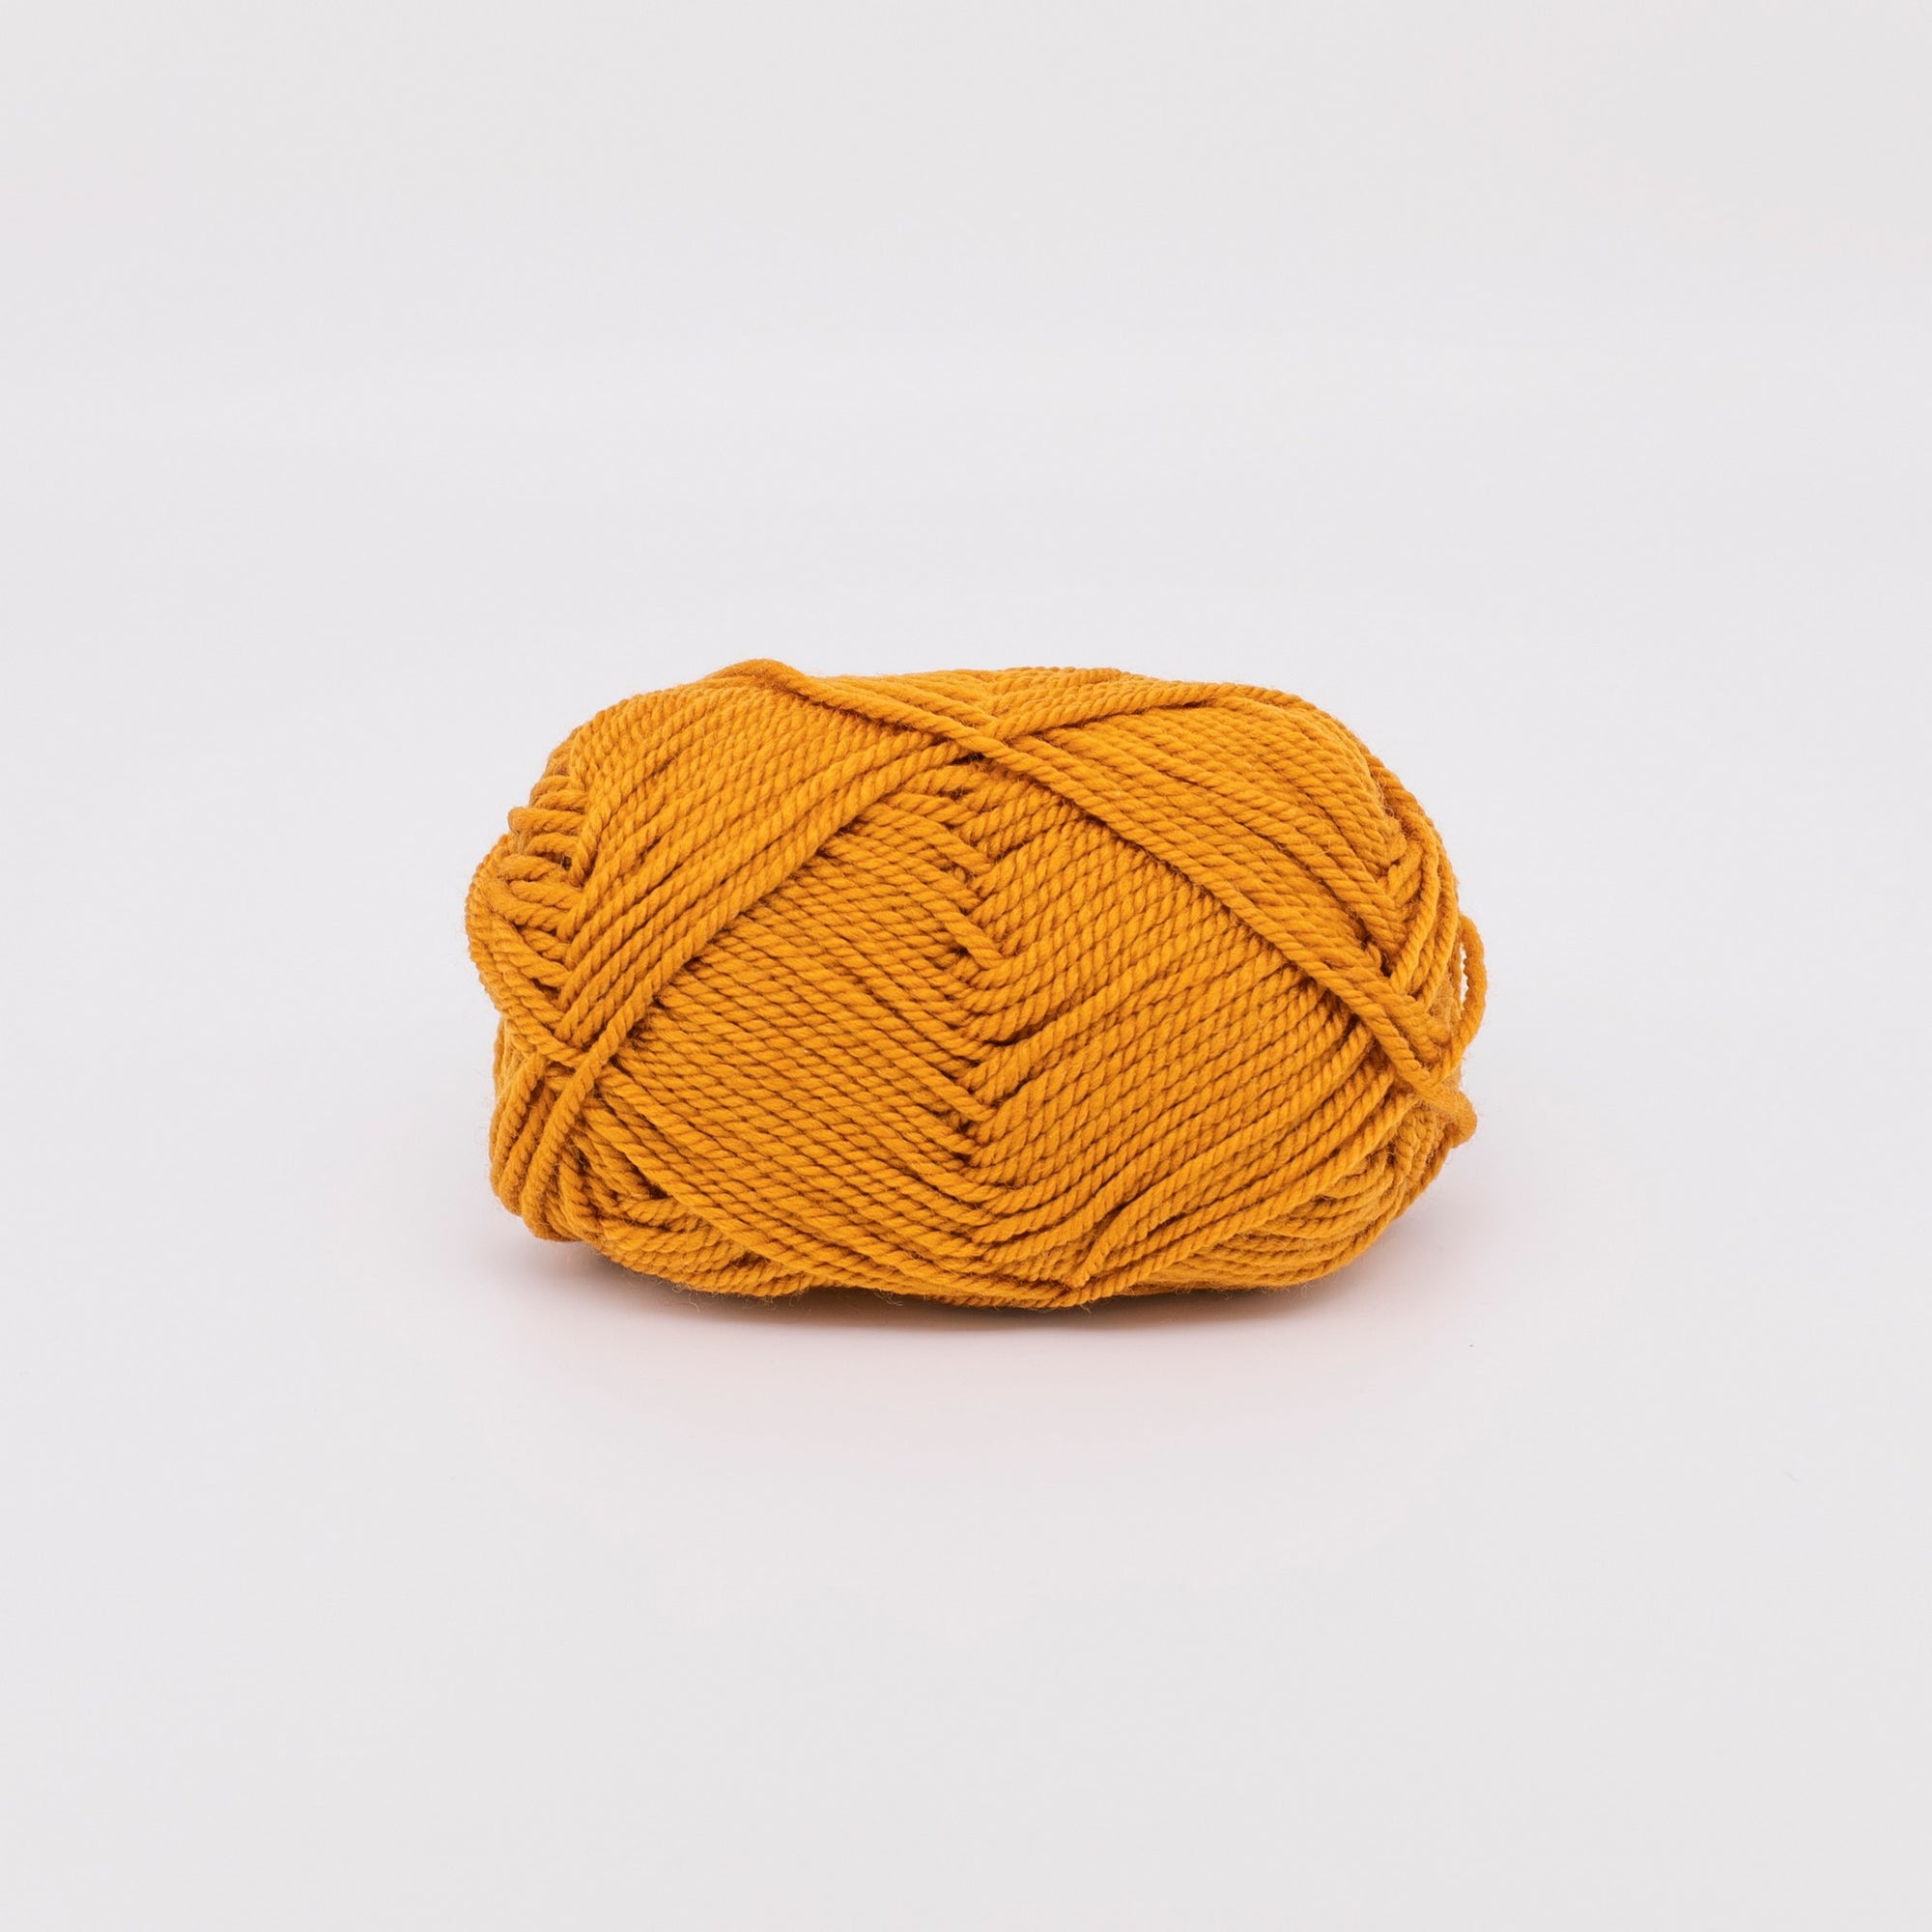 Wool Yarn For Knitting, Crochet & Weaving - Merino & Blend Tagged